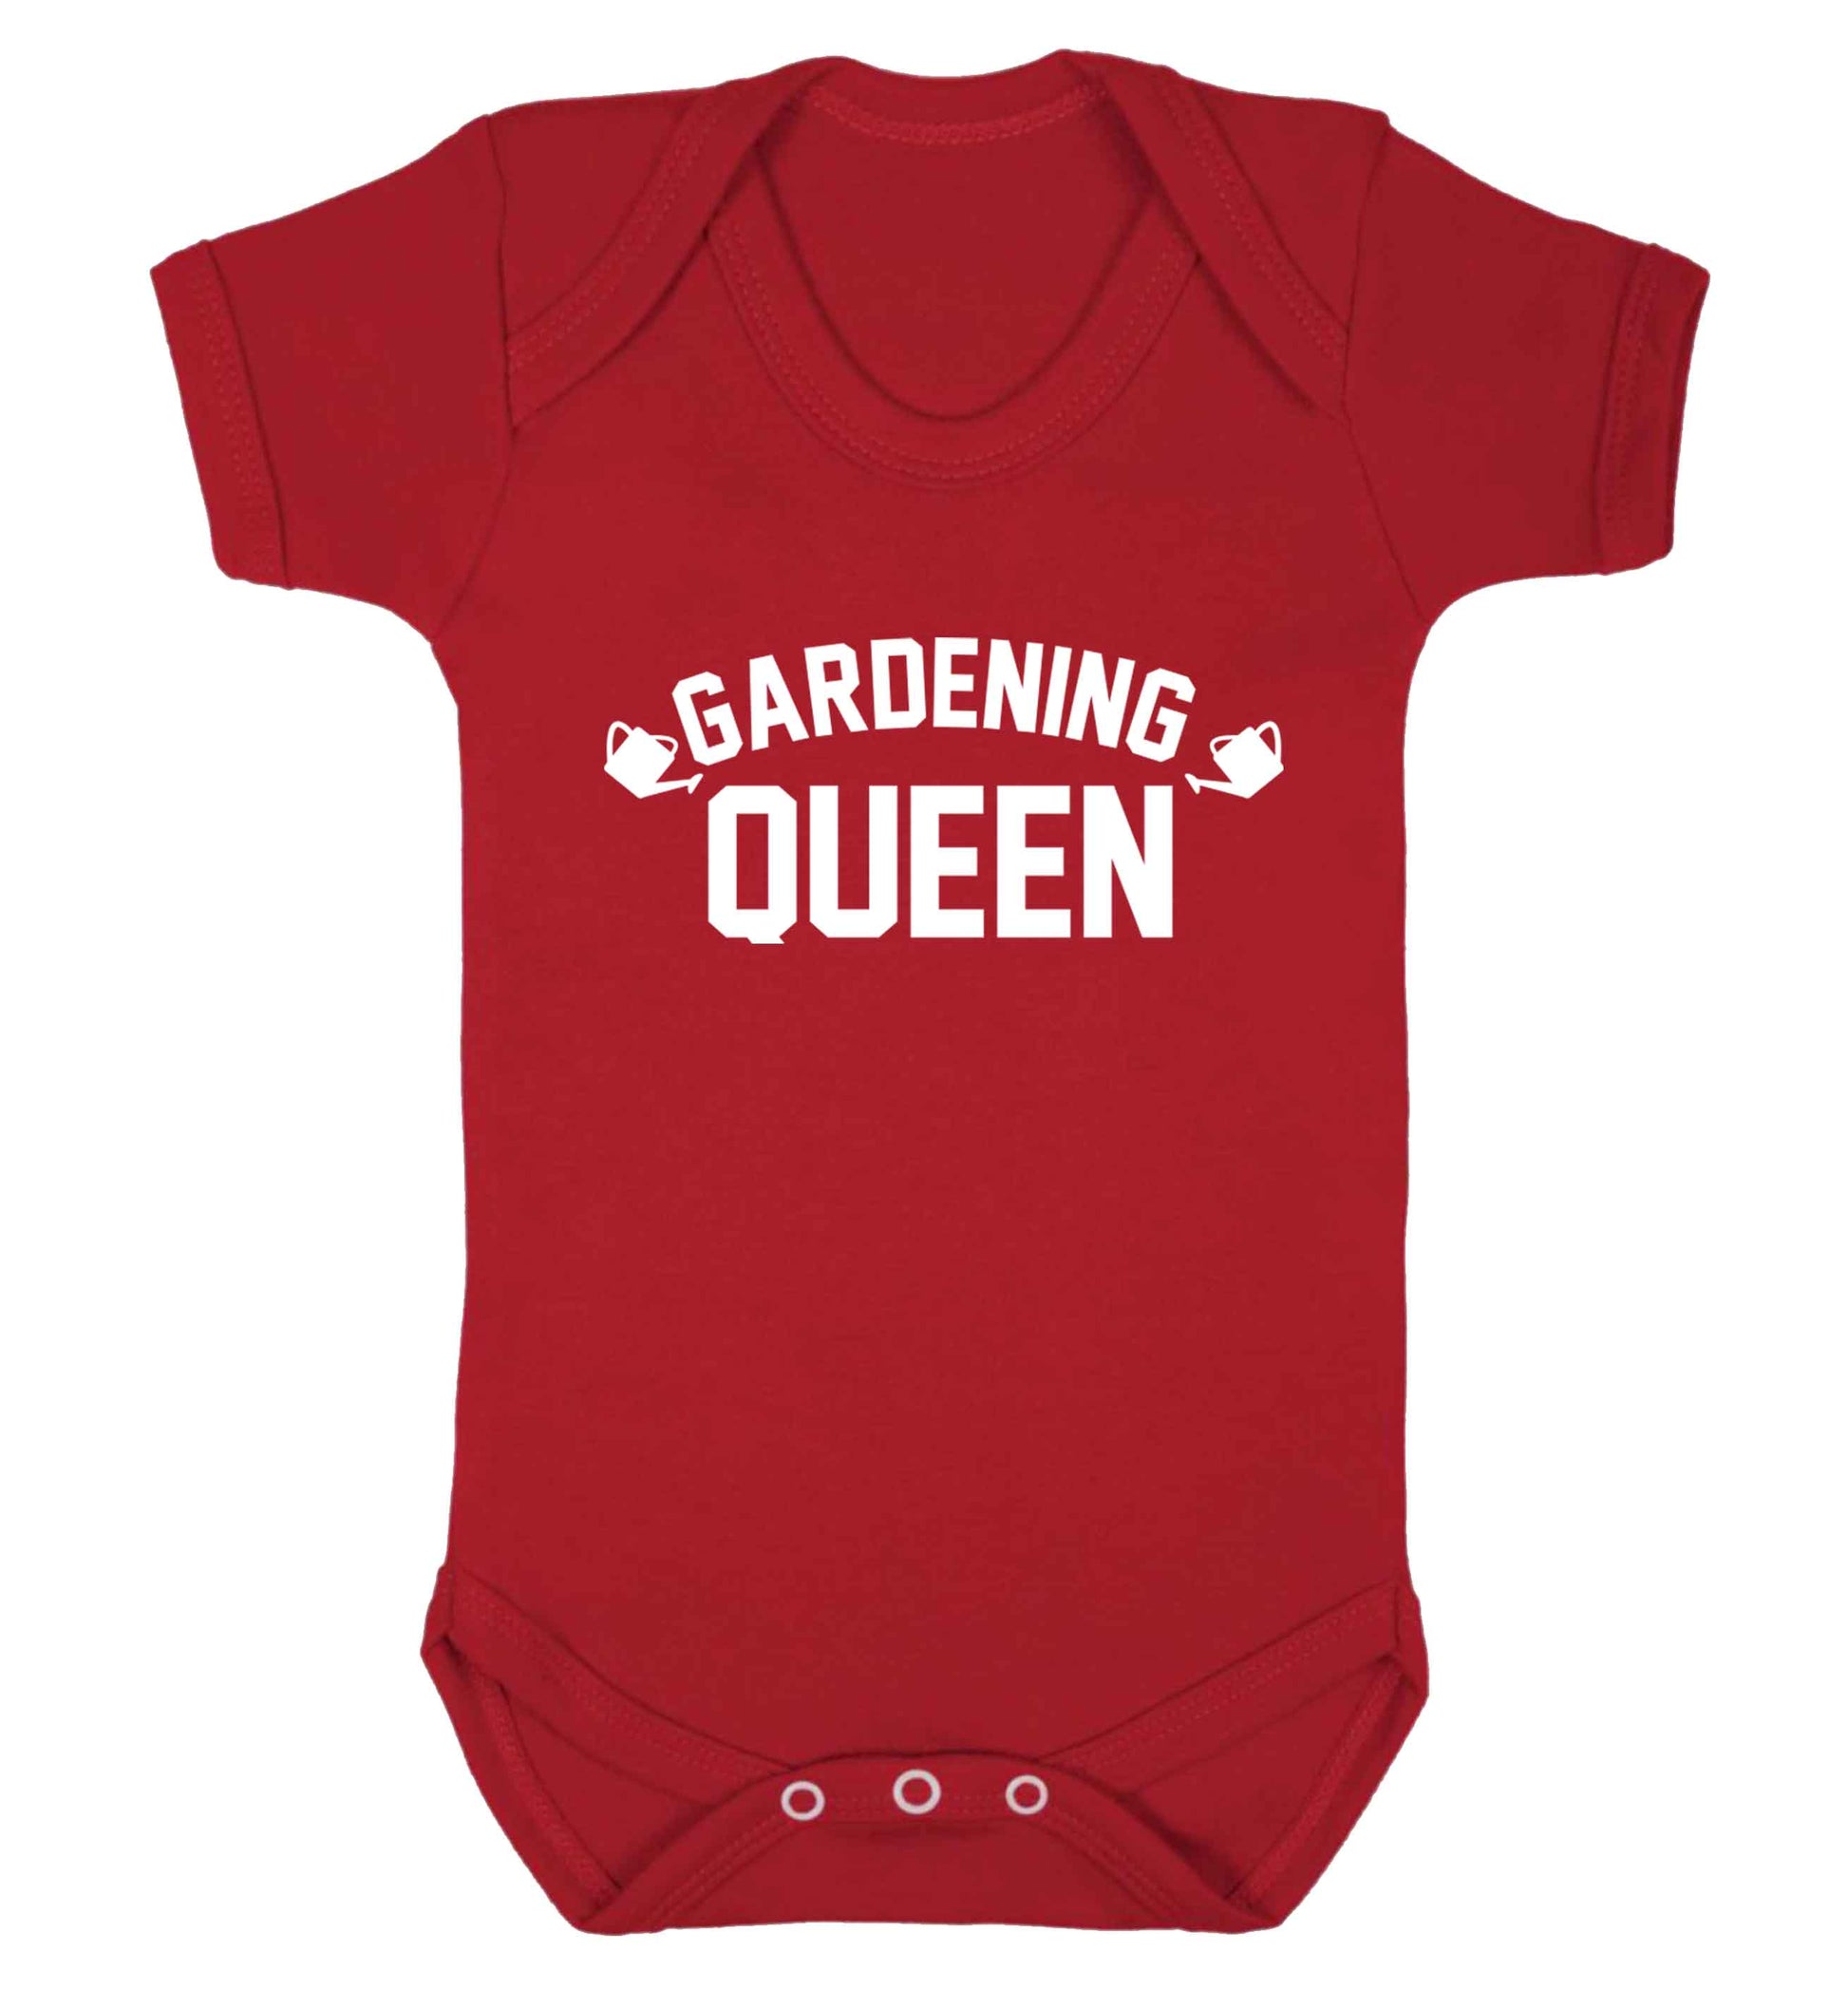 Gardening queen Baby Vest red 18-24 months